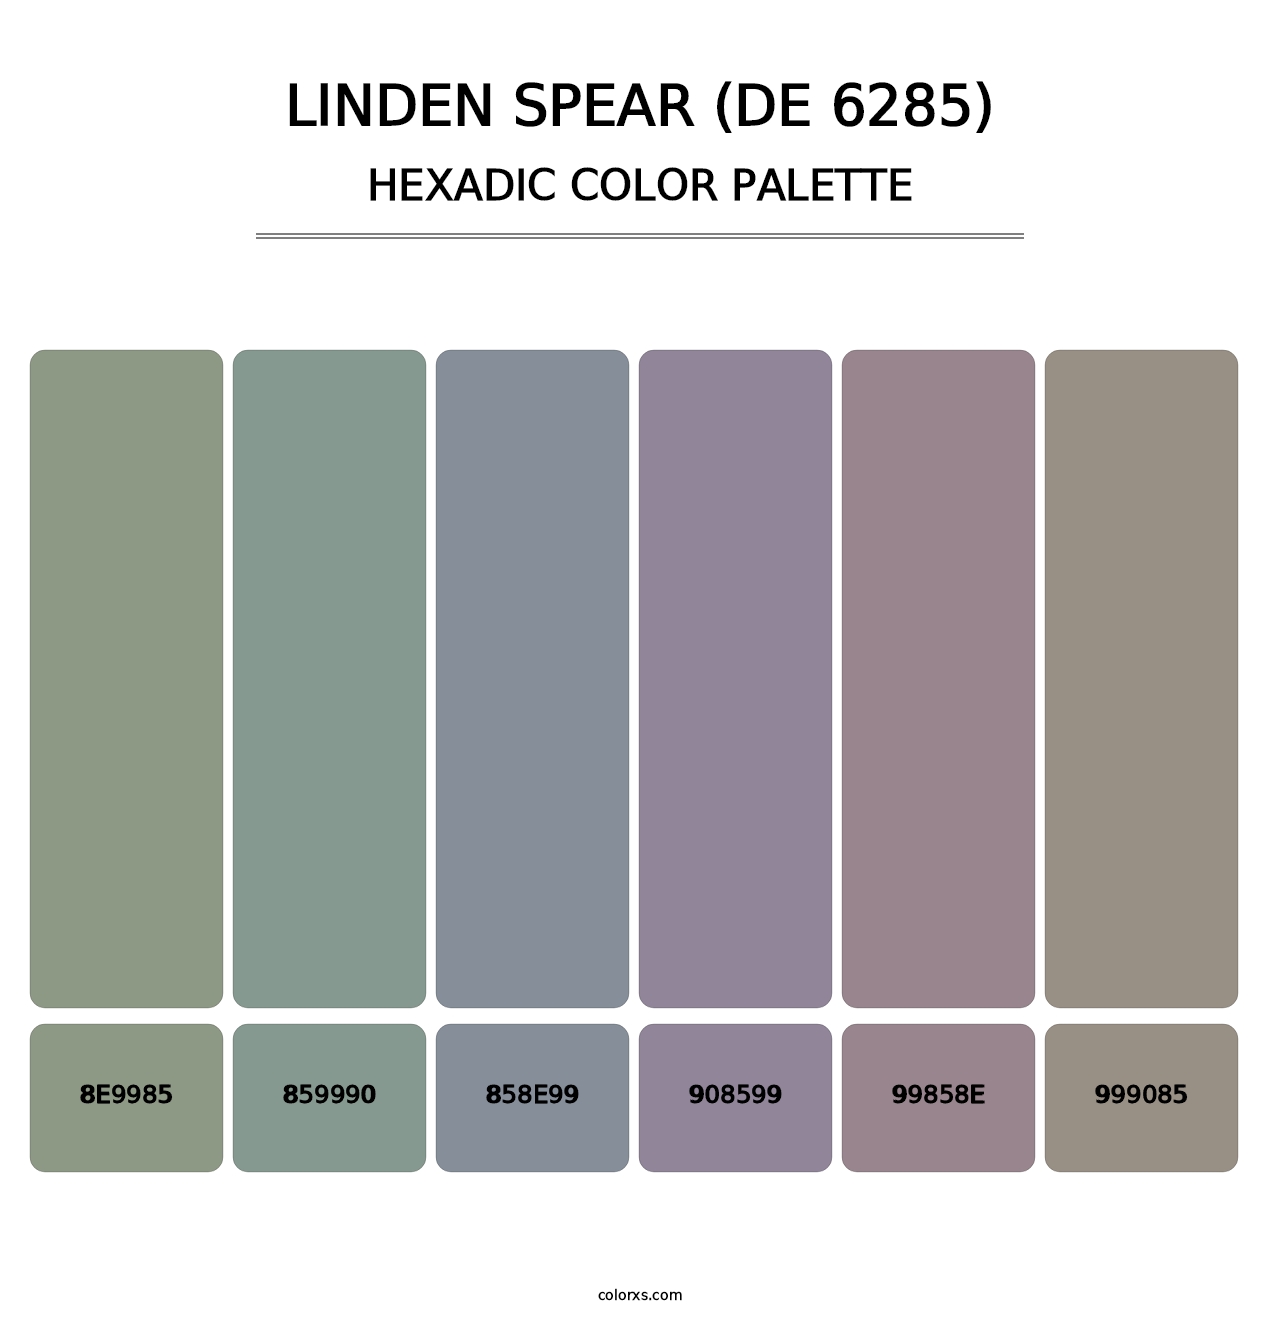 Linden Spear (DE 6285) - Hexadic Color Palette